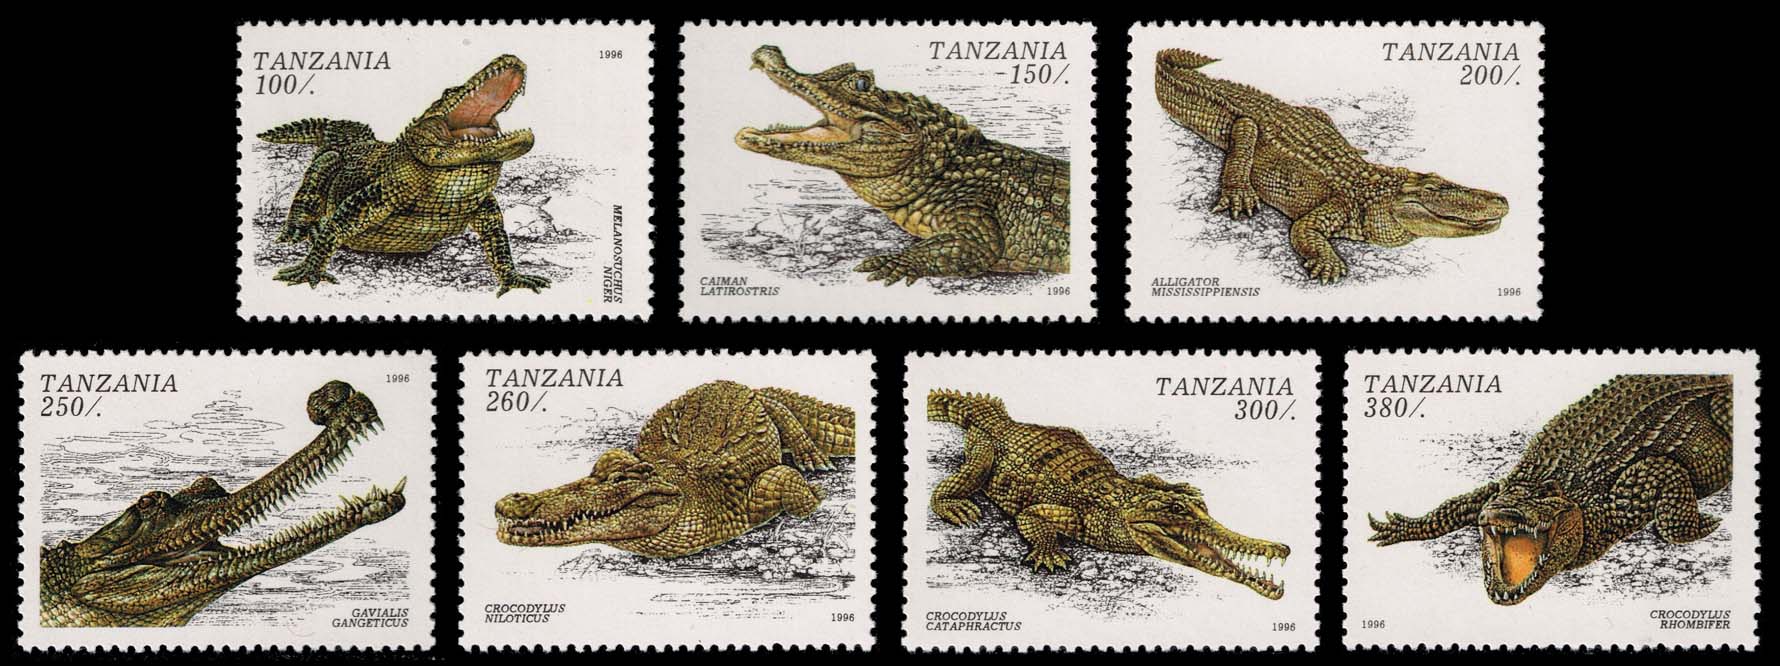 Tanzania #1463-1469 Crocodilians Set of 7; MNH - Click Image to Close